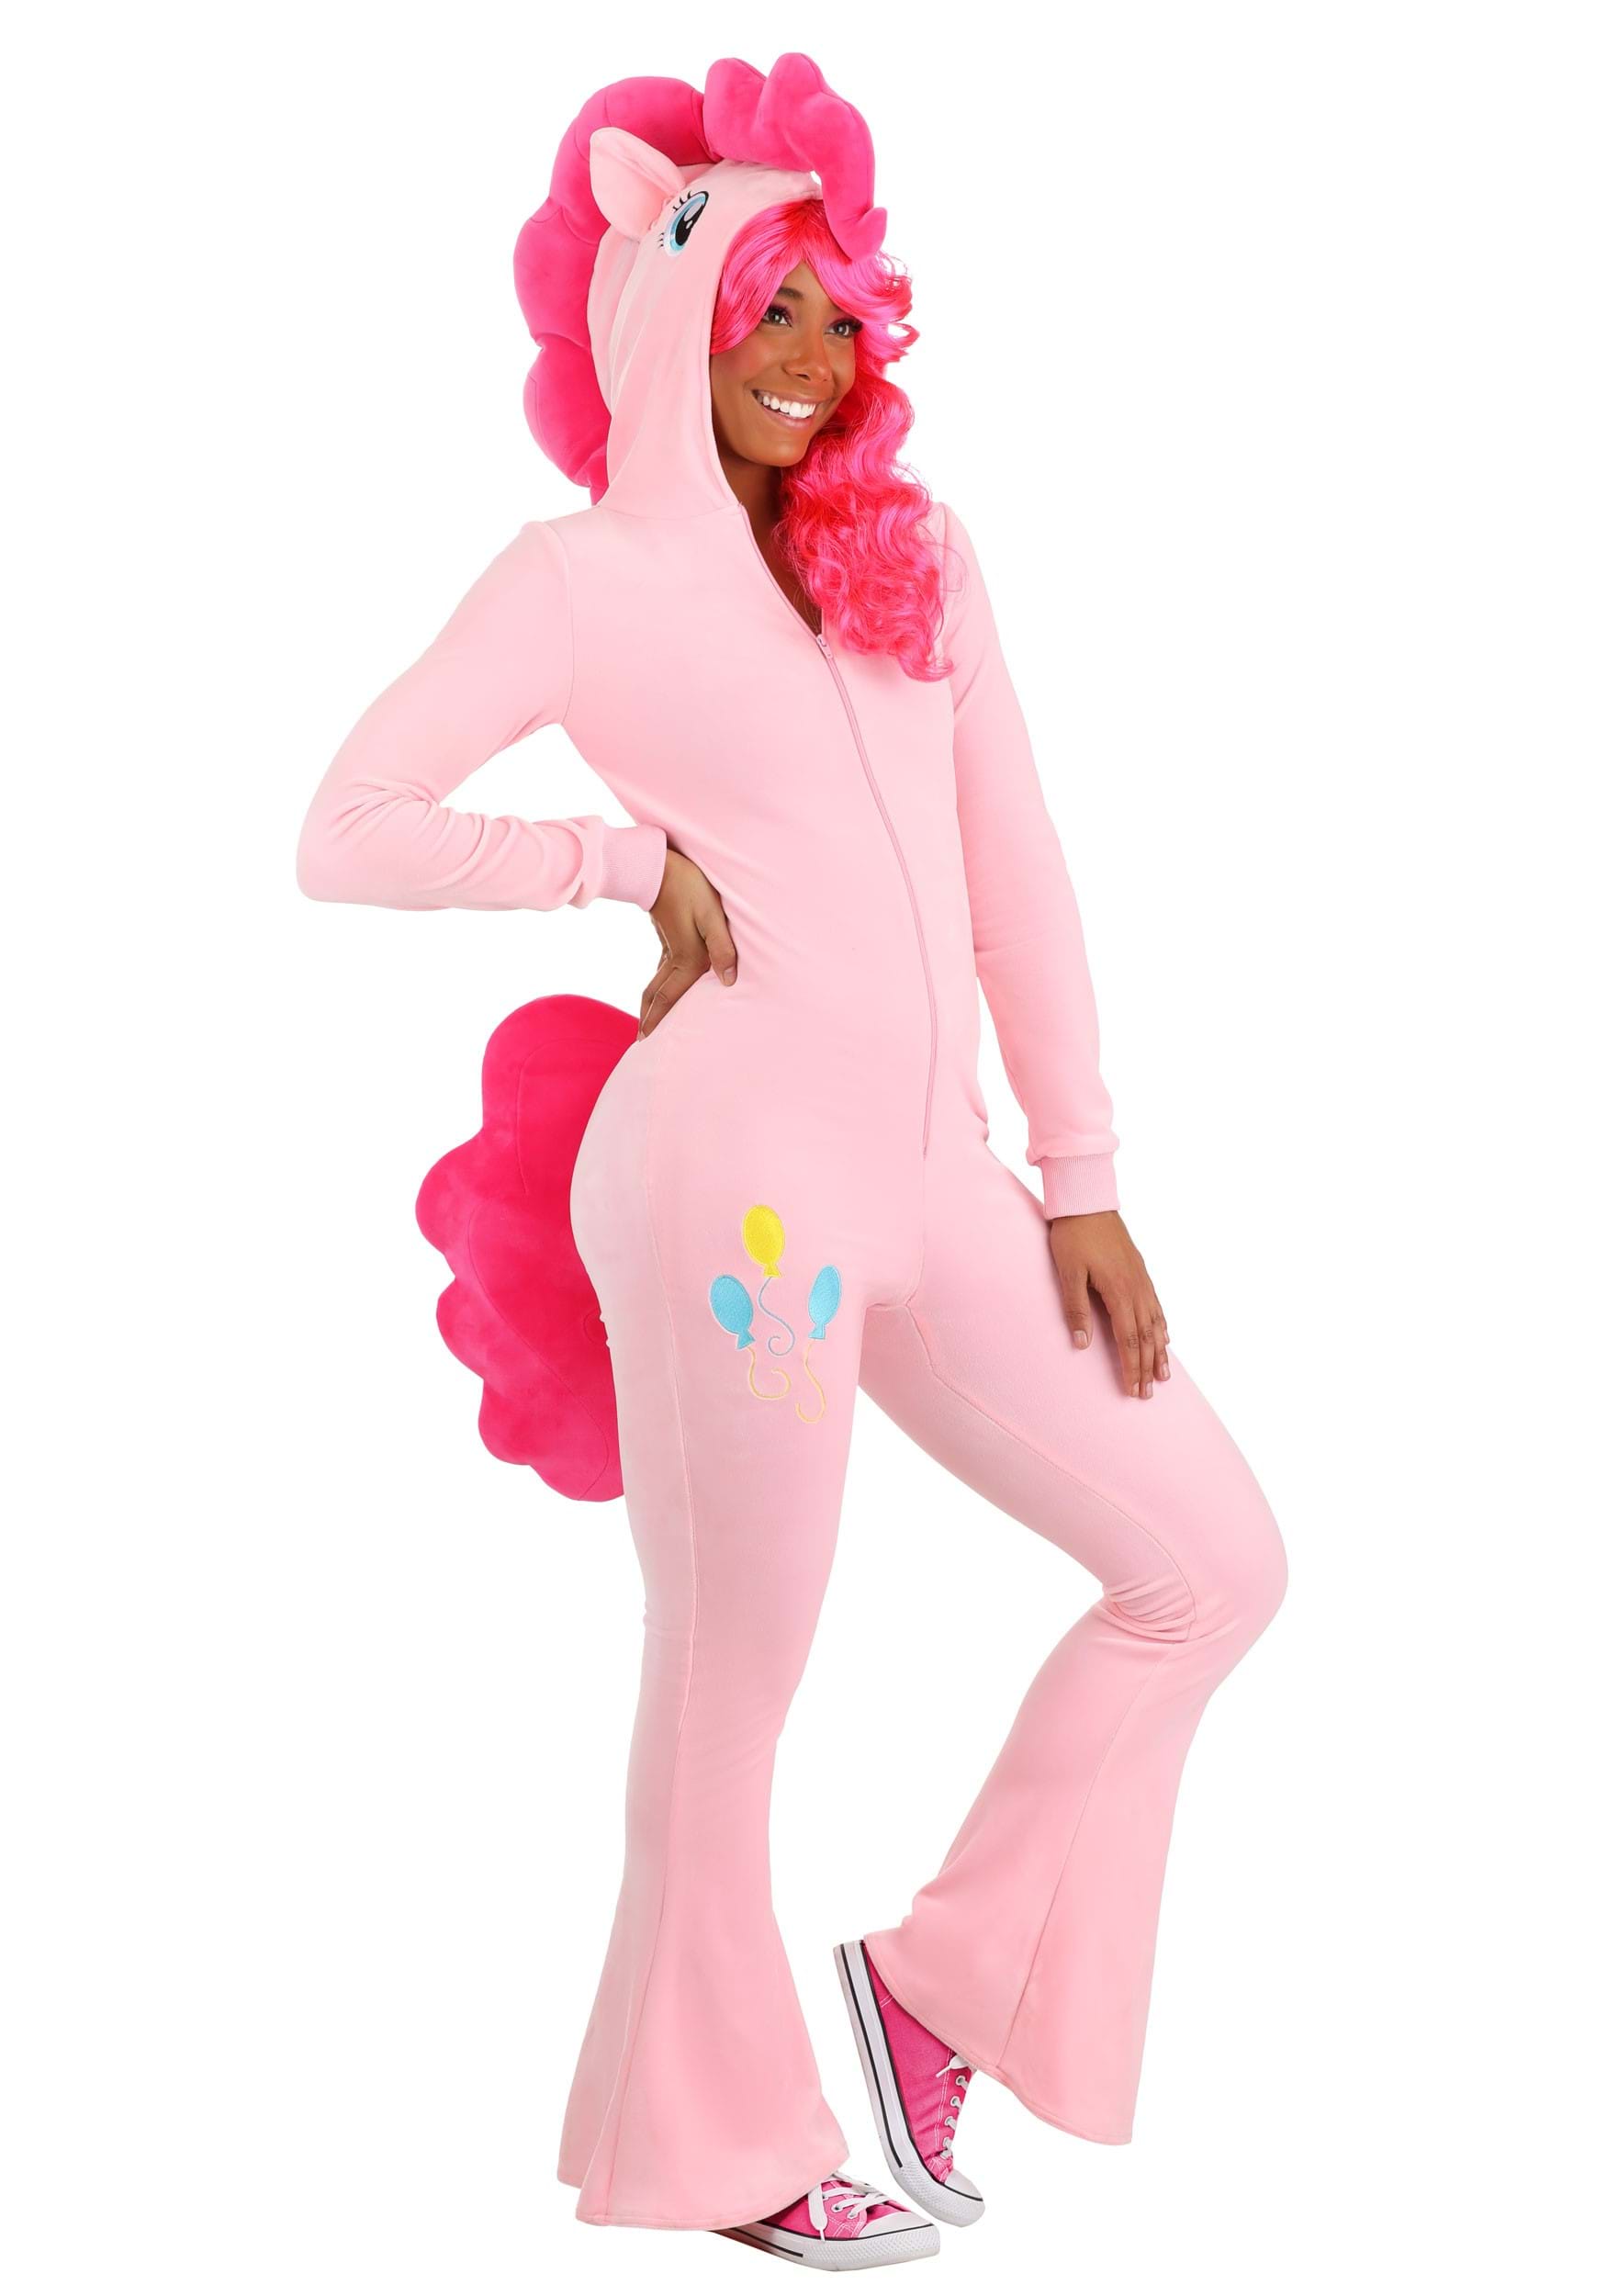 Photos - Fancy Dress Hasbro FUN Costumes My Little Pony Pinkie Pie Costume for Women Pink/Blue FUN 